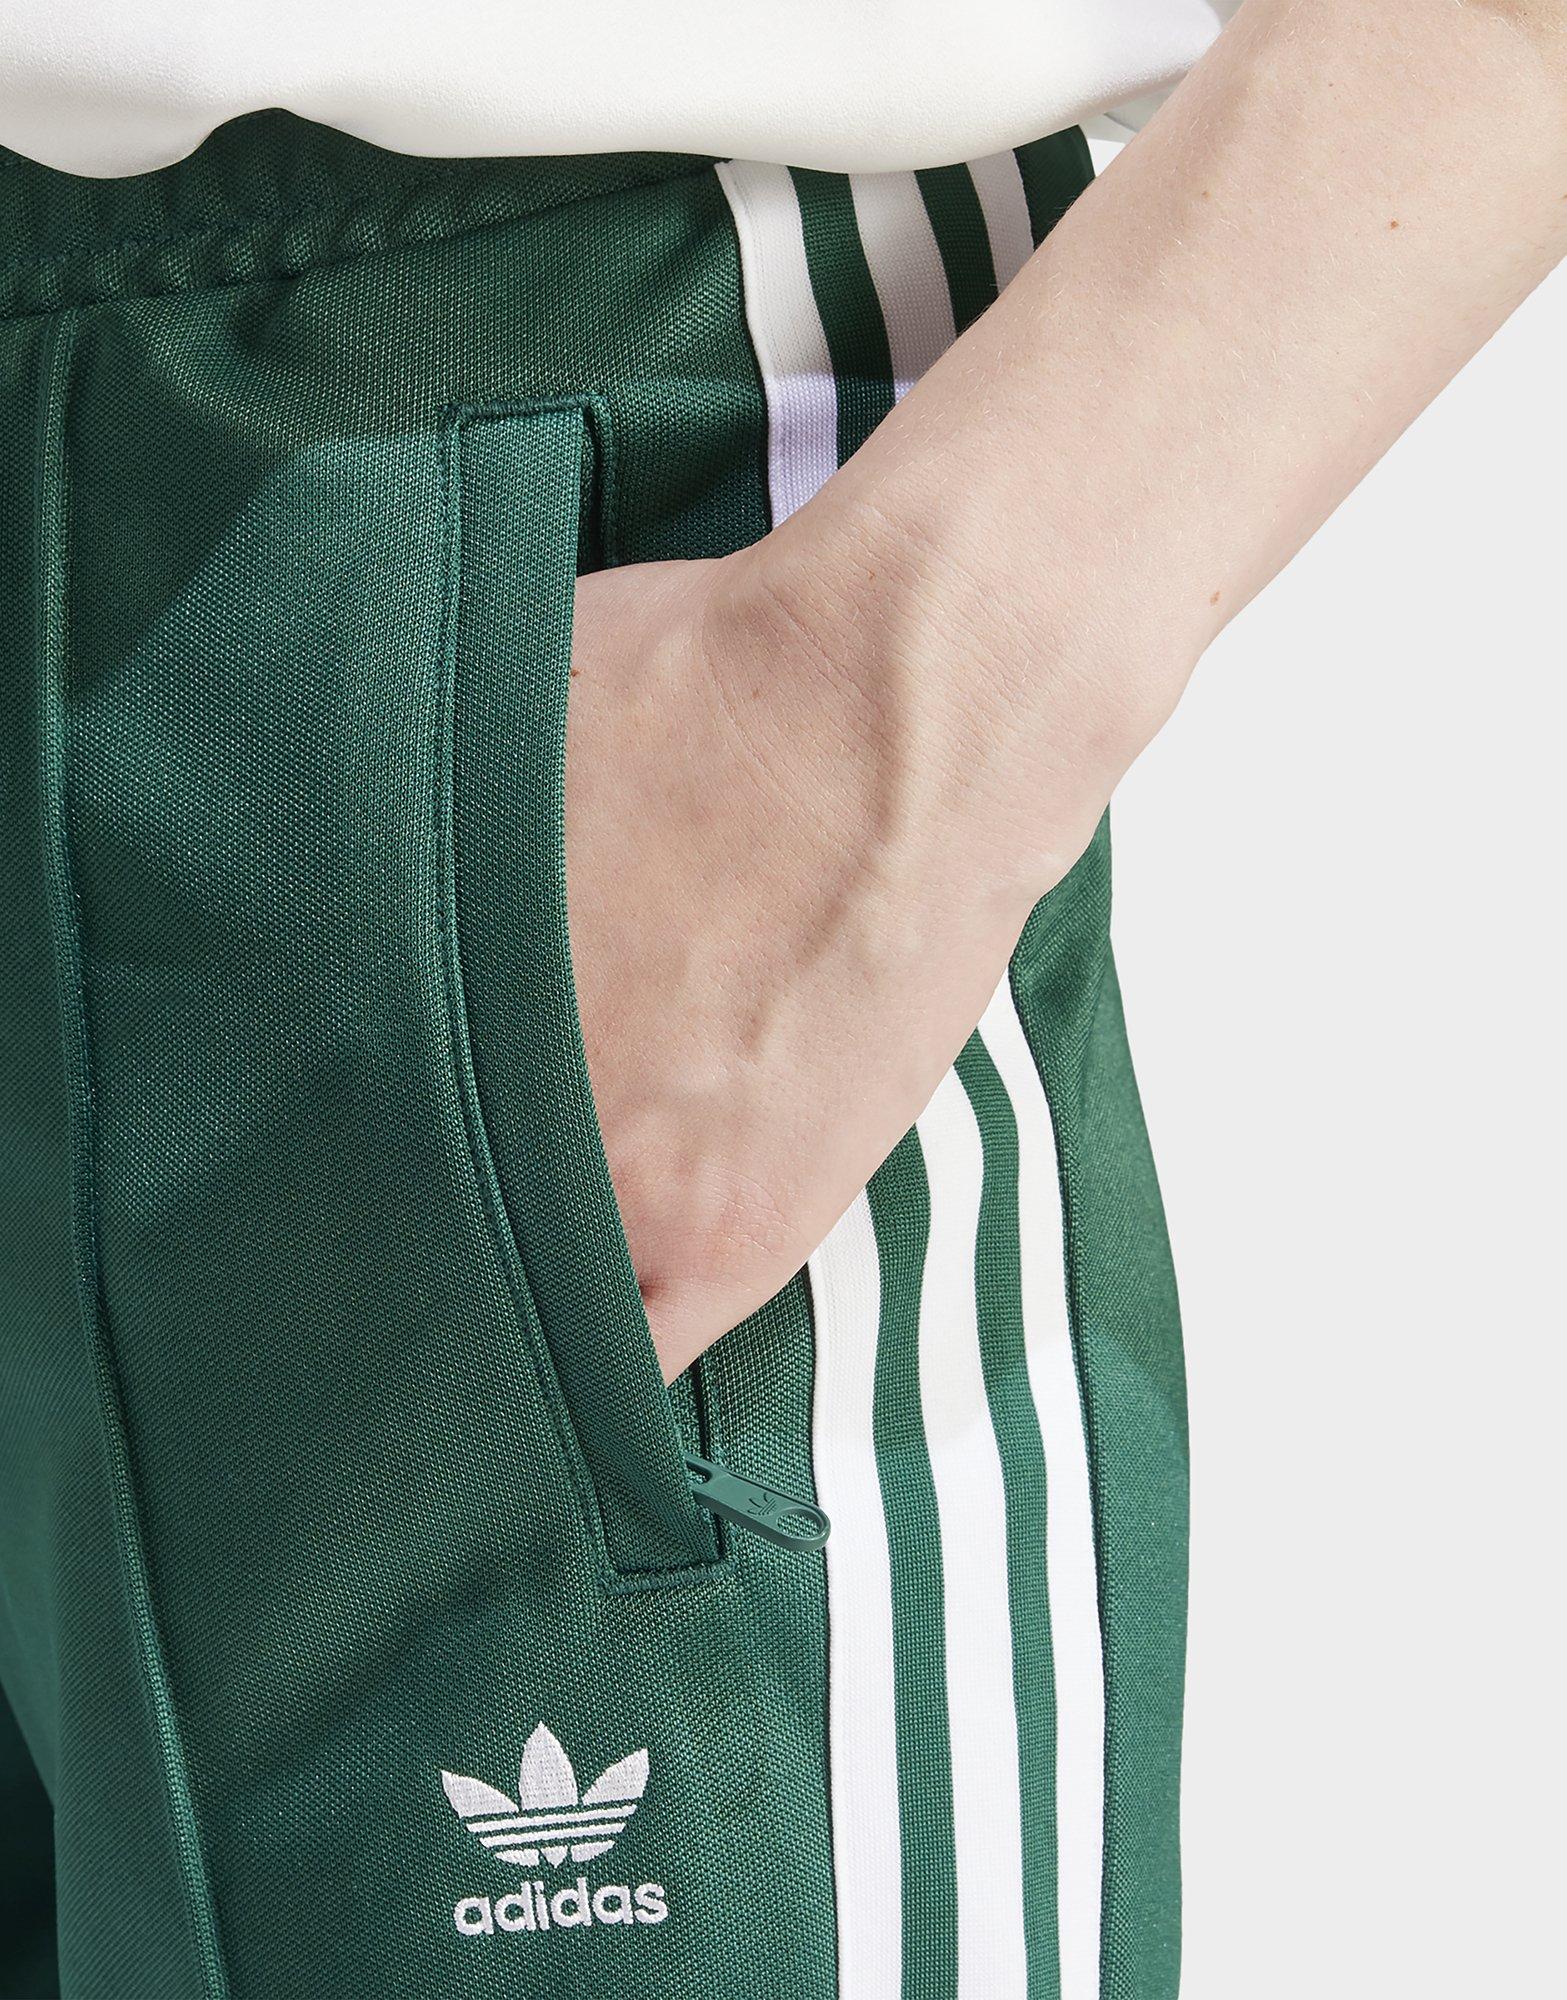 adidas Originals Womens Montreal Track Pants - Green